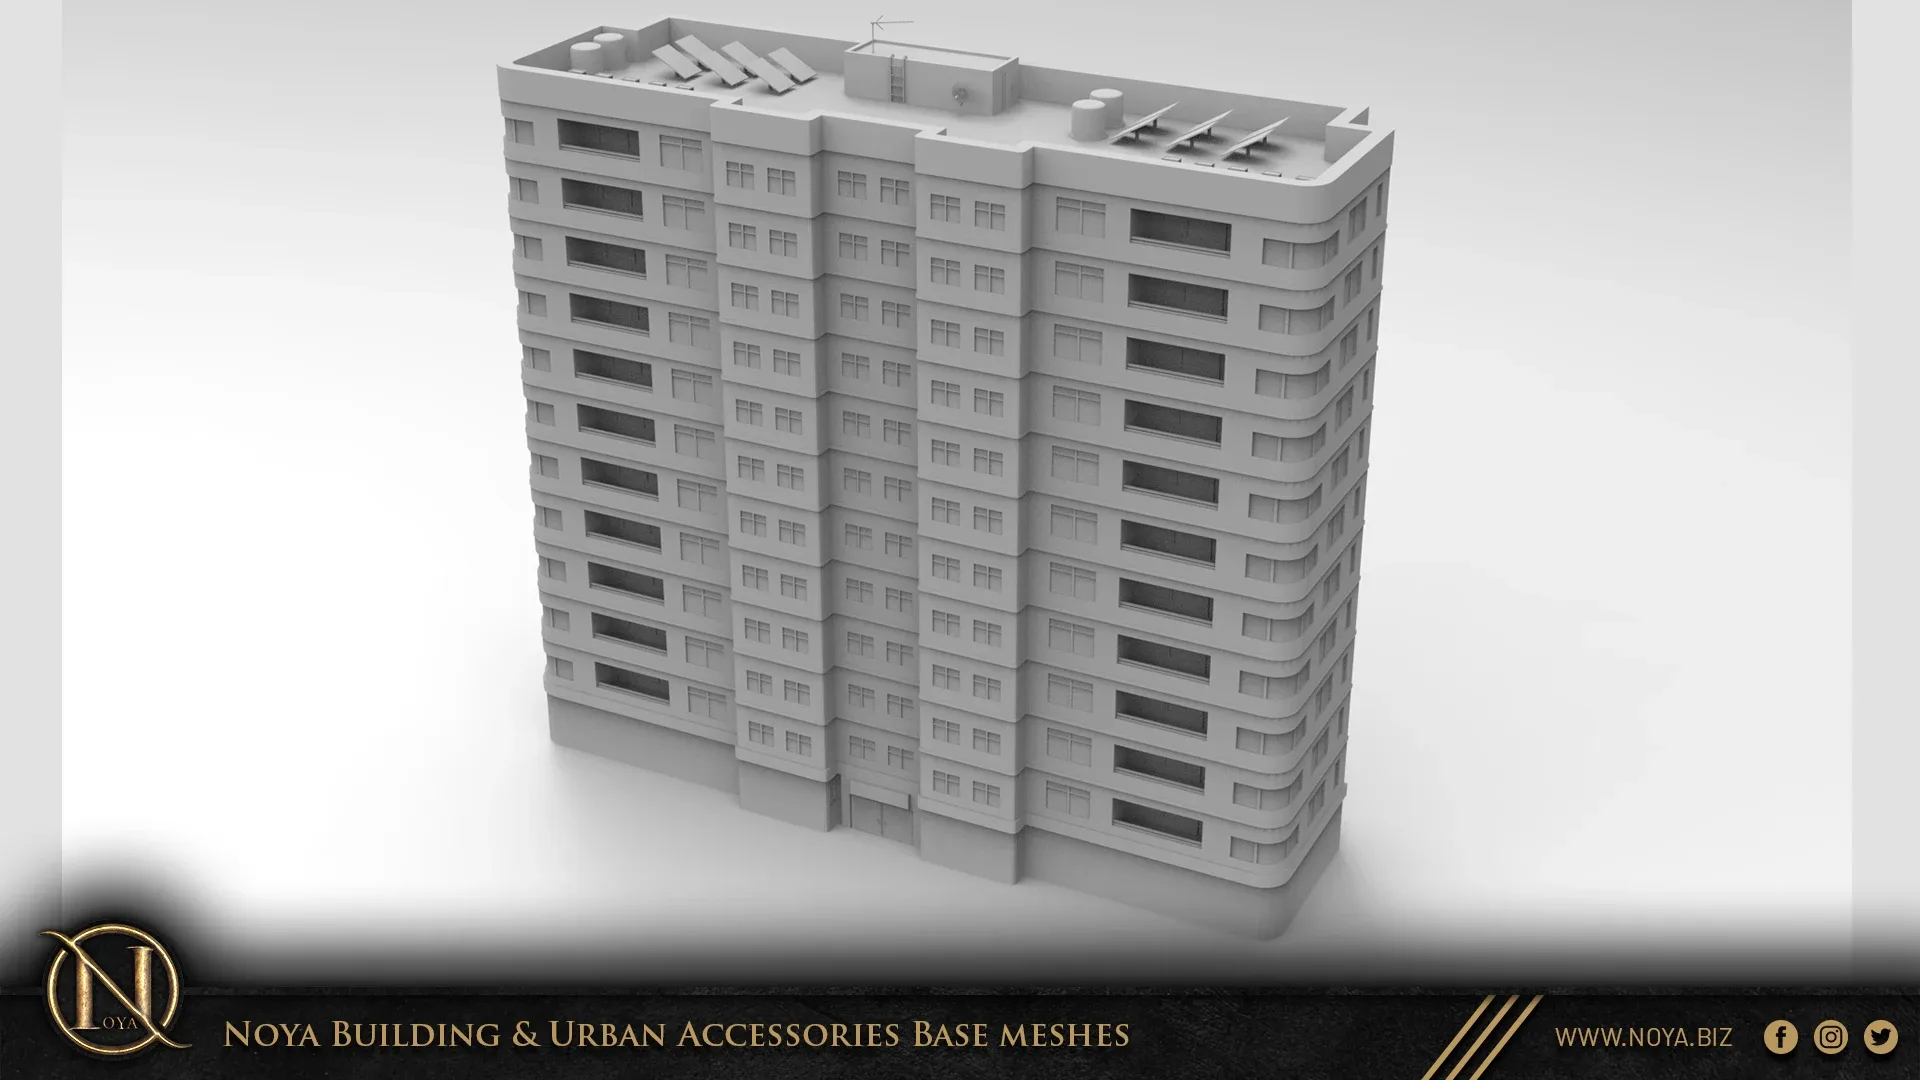 Noya 100 Building & Urban Accessories Base meshes